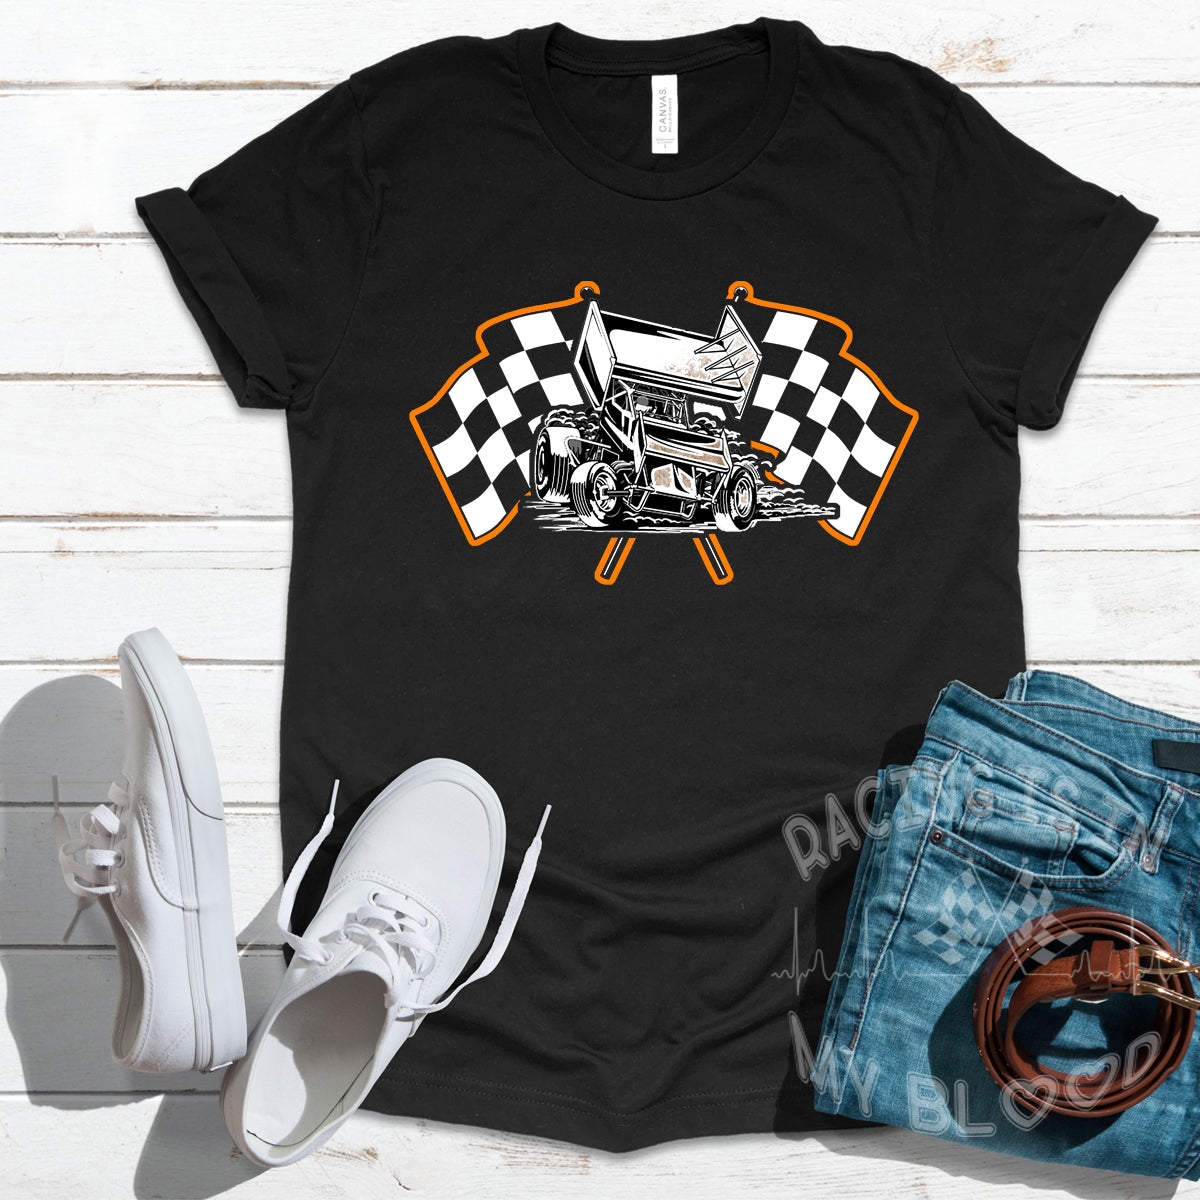 Sprint Car Racing With Flag T-Shirts!